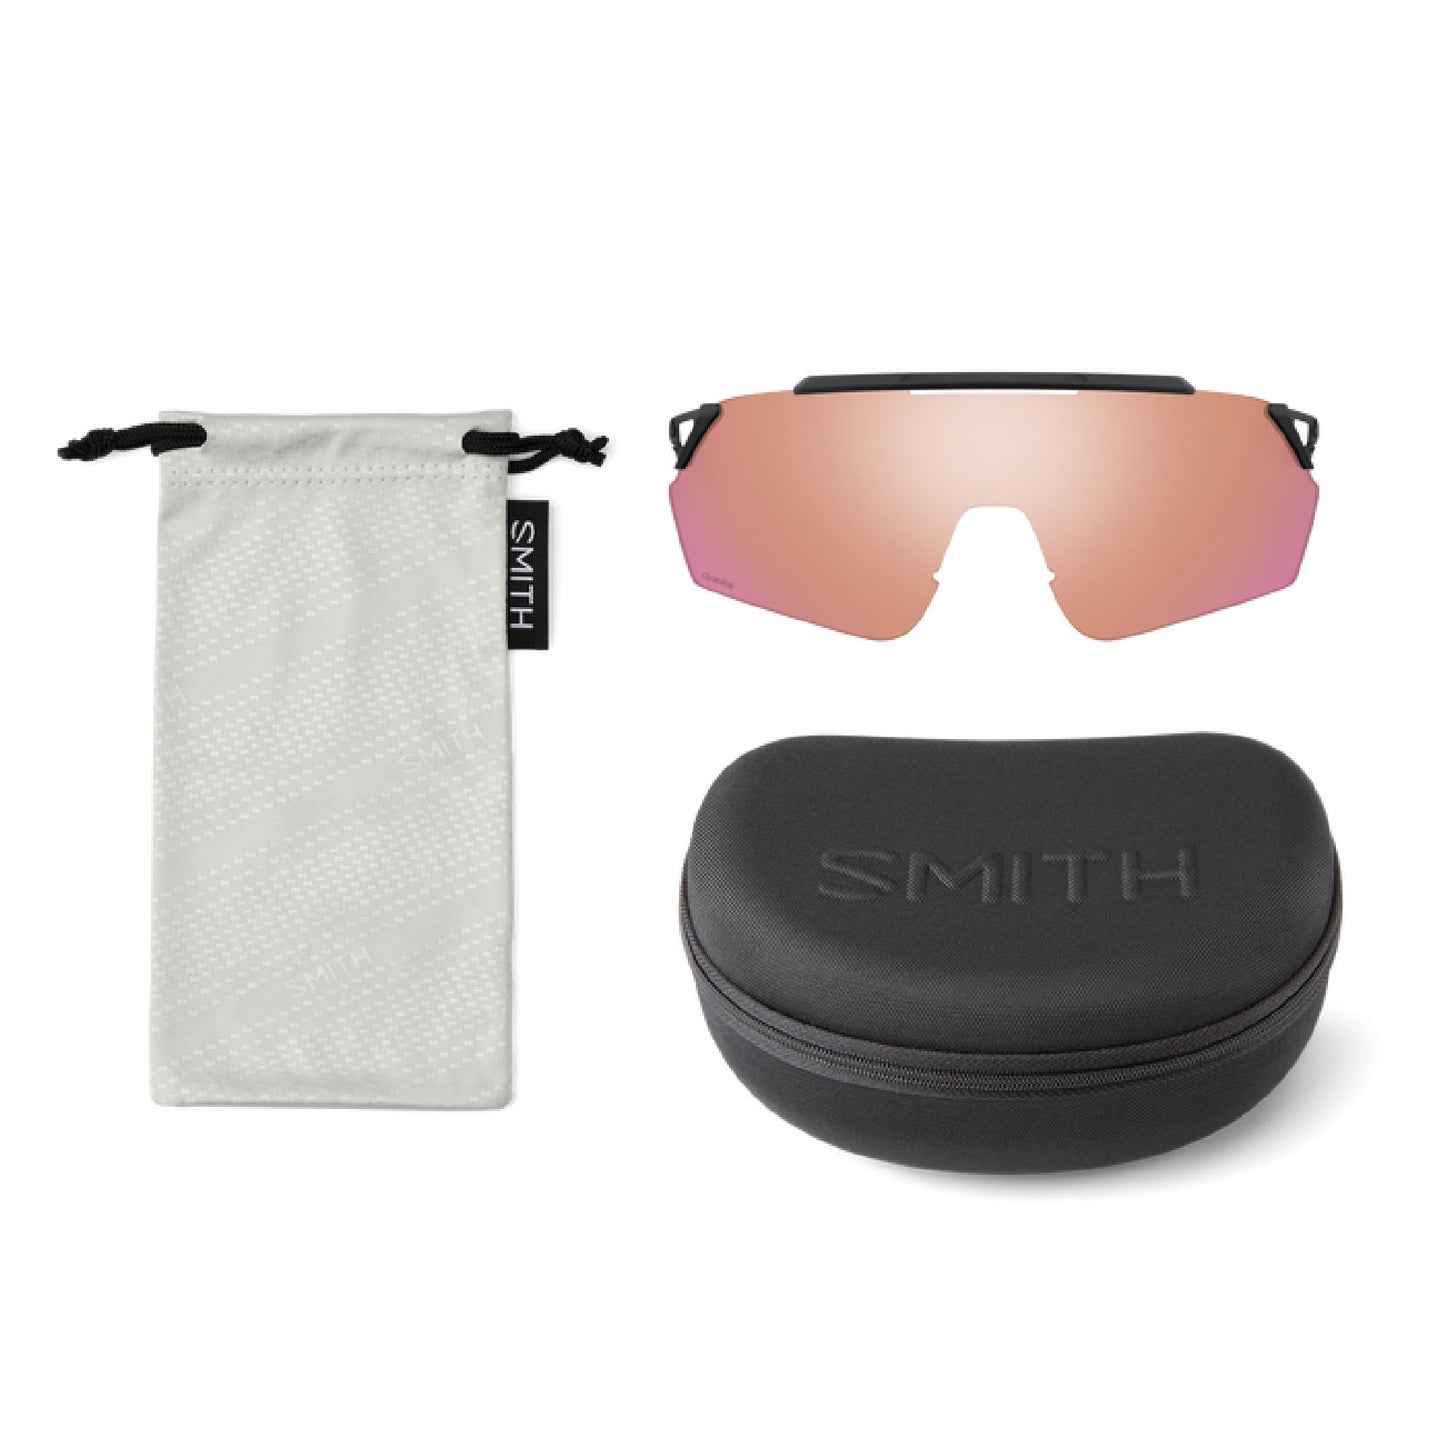 Smith Ruckus Sunglasses Matte Black ChromaPop Black Lens Sunglasses